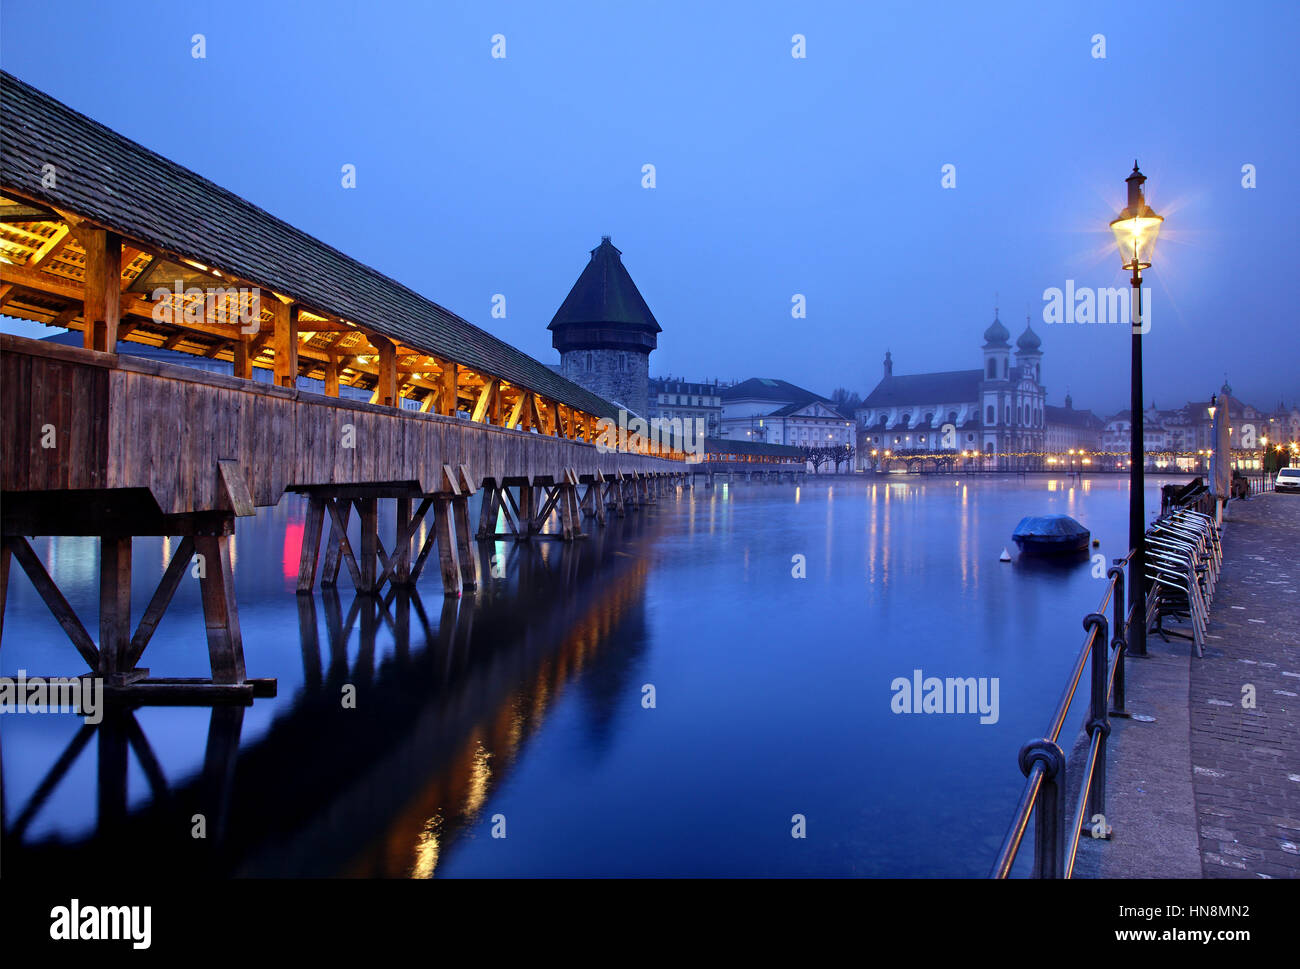 The famous Kapellbrücke ('Chapel Bridge'), a covered wooden footbridge across the Reuss River in the city of Lucern, Switzerland Stock Photo